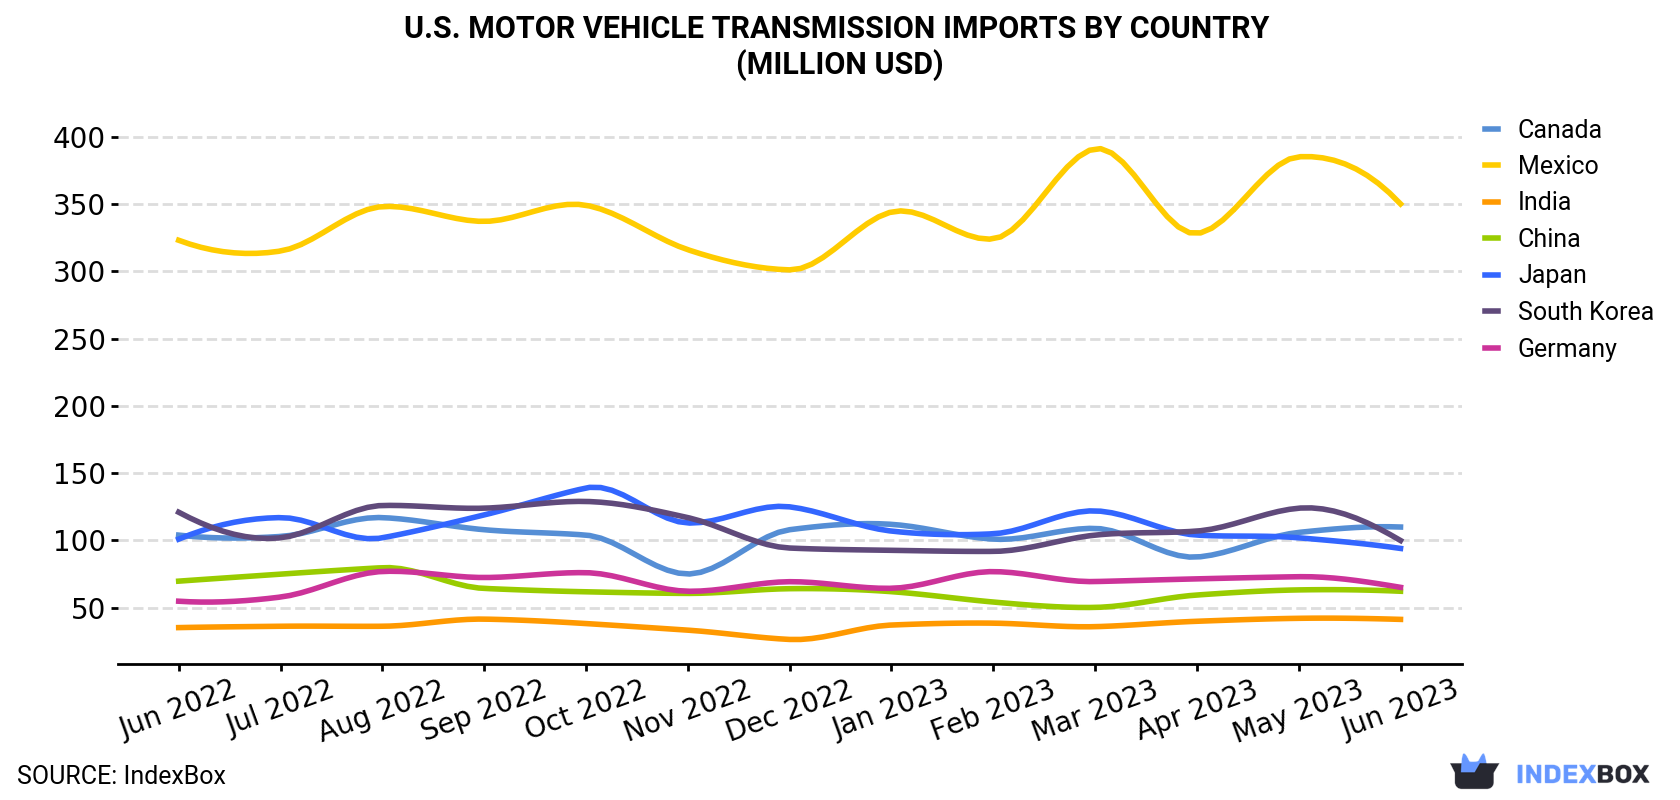 U.S. Motor Vehicle Transmission Imports By Country (Million USD)